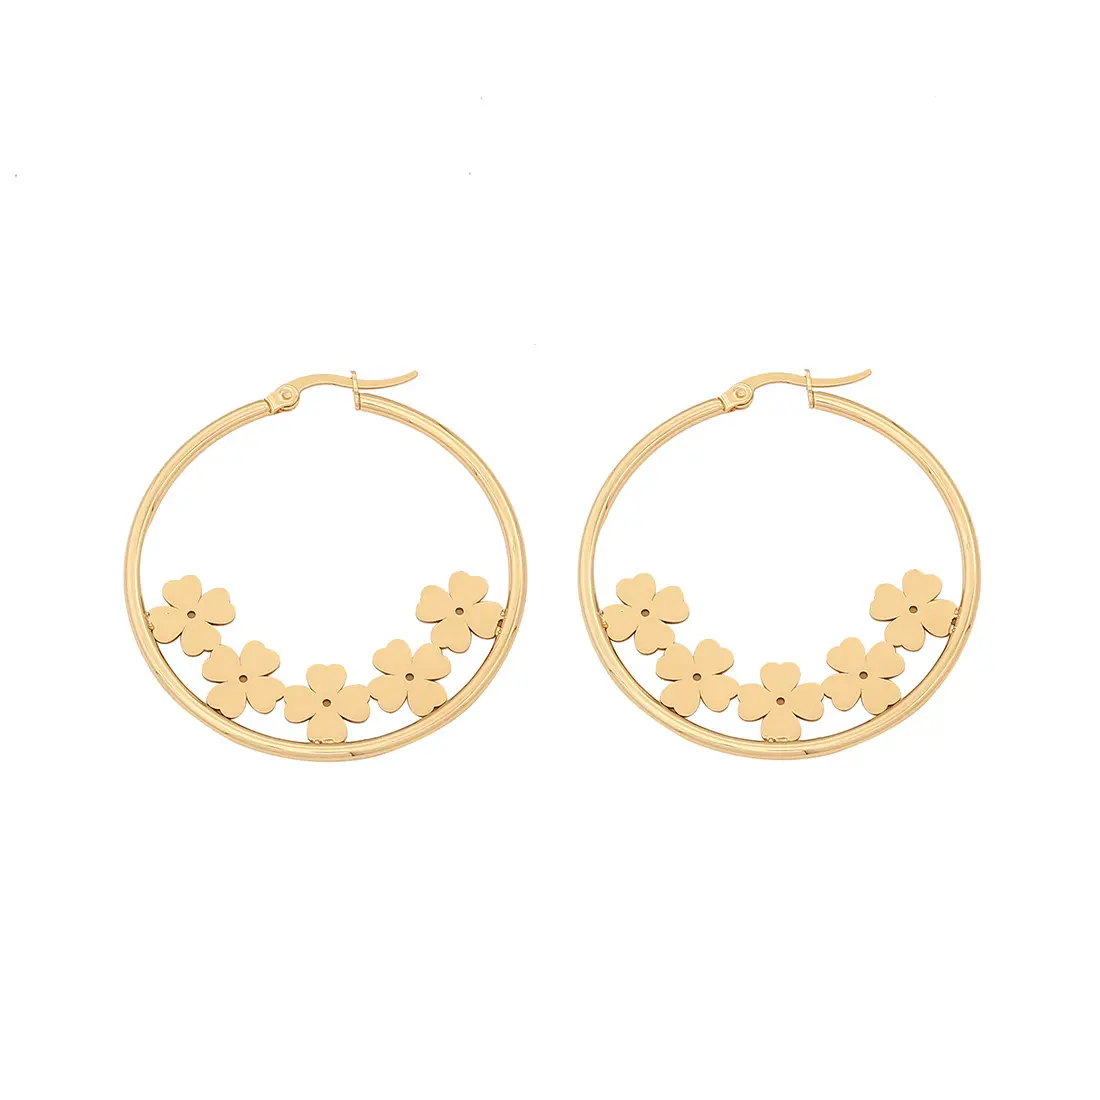 Gold Earrings Stainless steel hoop earrings butterfly flower shapegold big hoop earrings